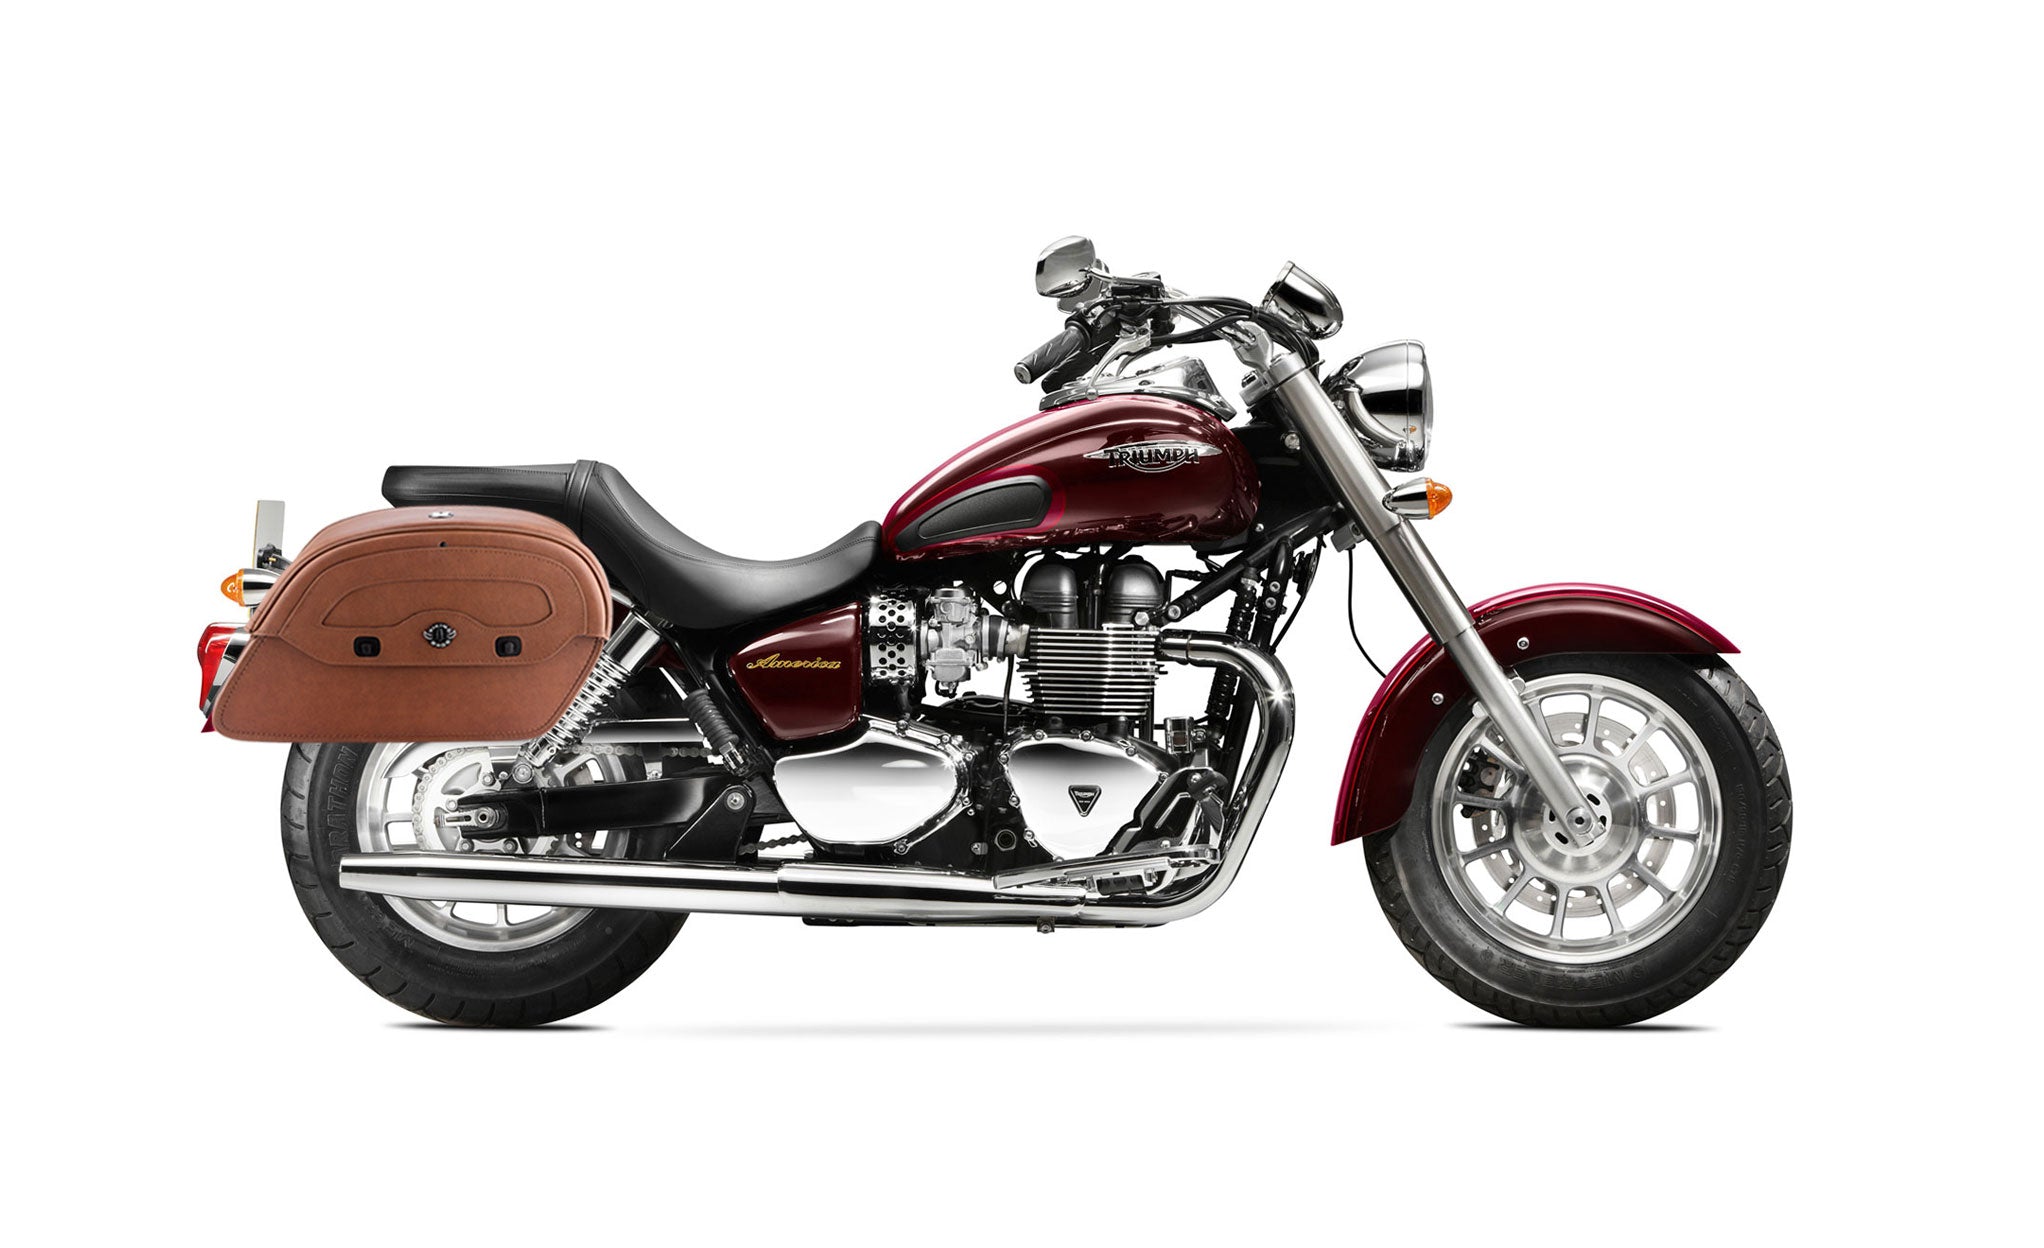 Viking Warrior Brown Large Triumph America Leather Motorcycle Saddlebags on Bike Photo @expand